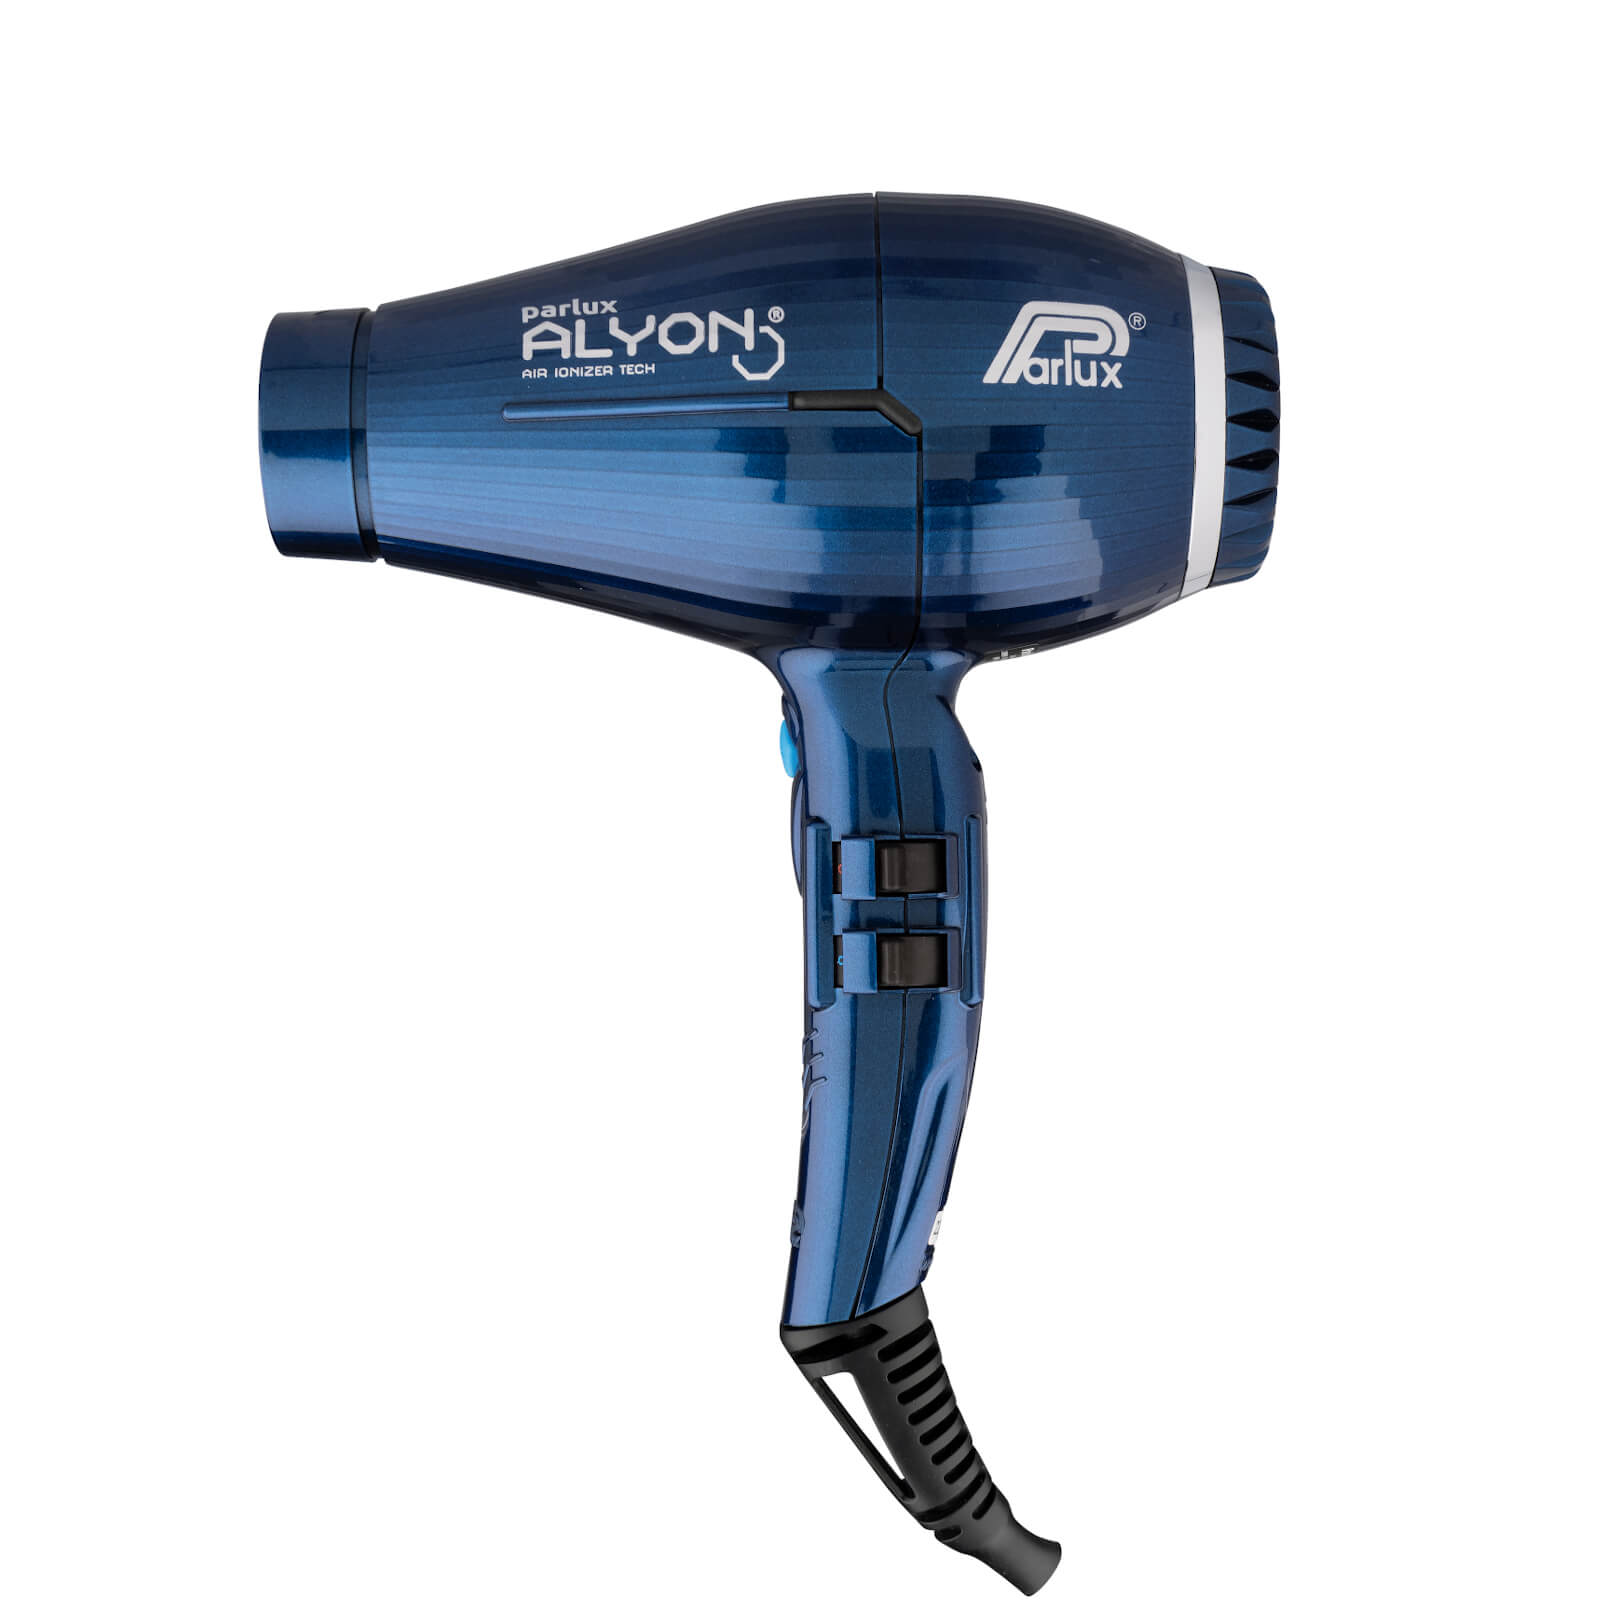 Parlux Alyon Air Ionzier Hair Dryer 2250W (Various Shades) - Midnight Blue